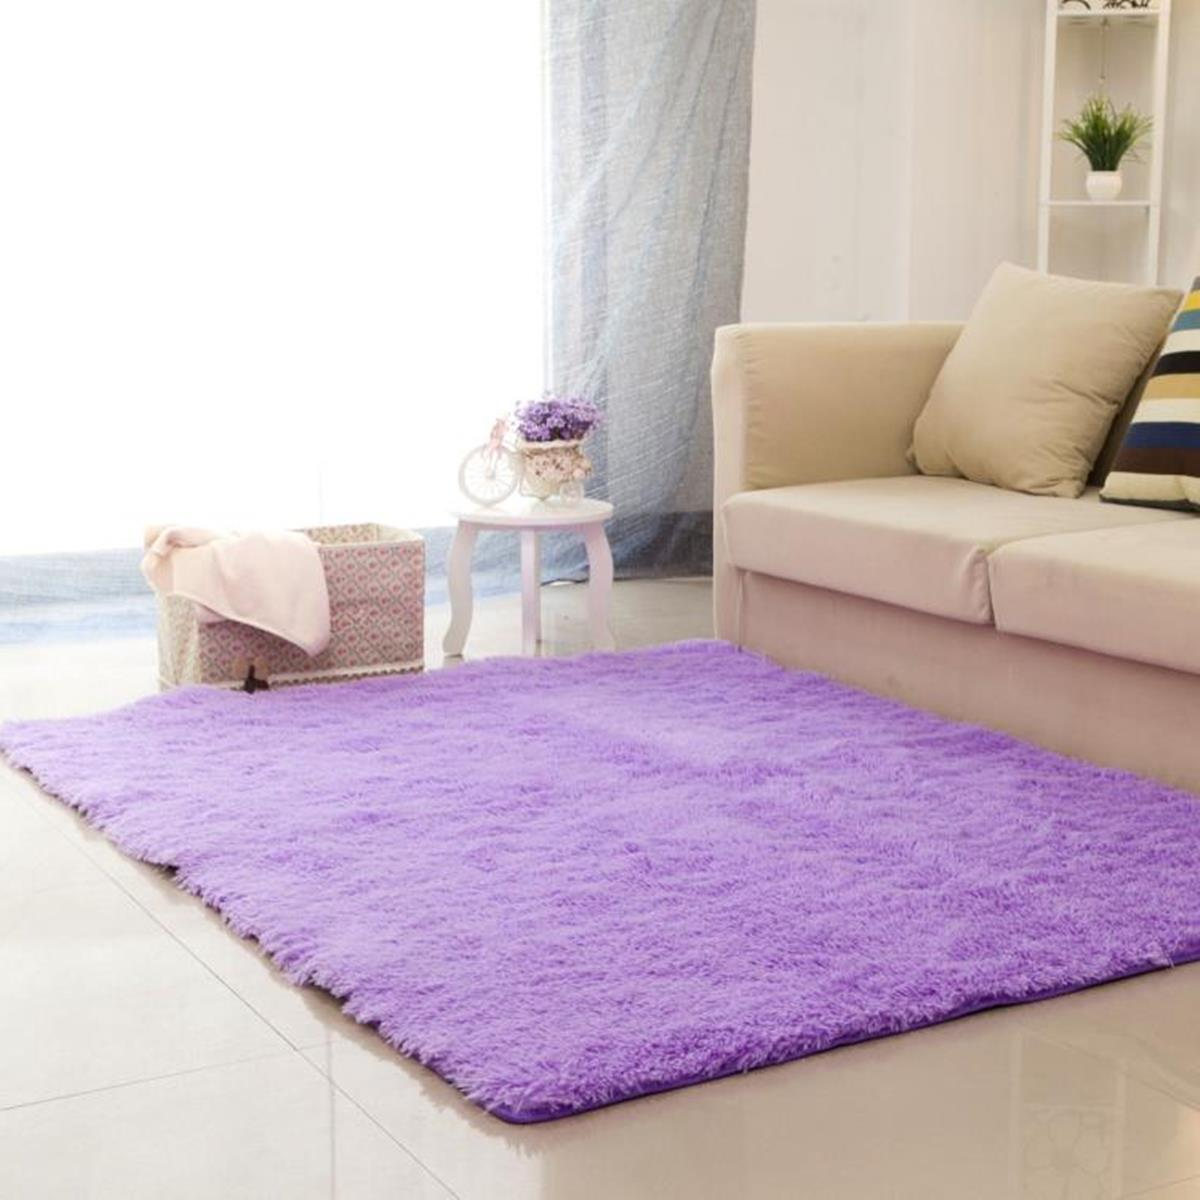 80cm x 160cm purple soft fluffy anti skid shaggy area rug living room ...